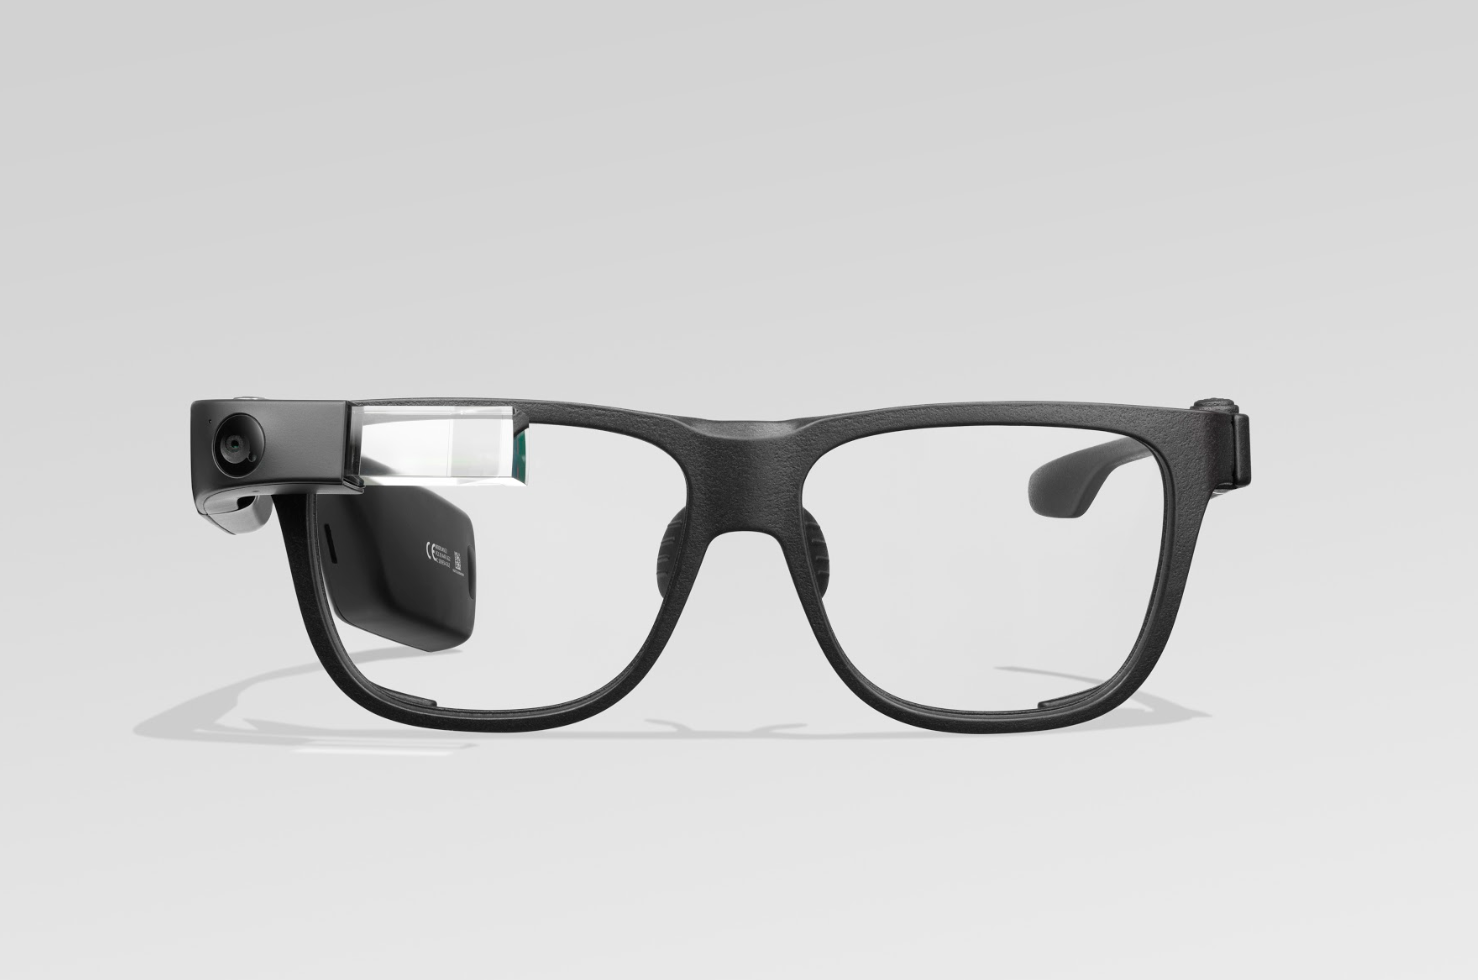 Google Glass Enterprise Edition 2 announced for $999